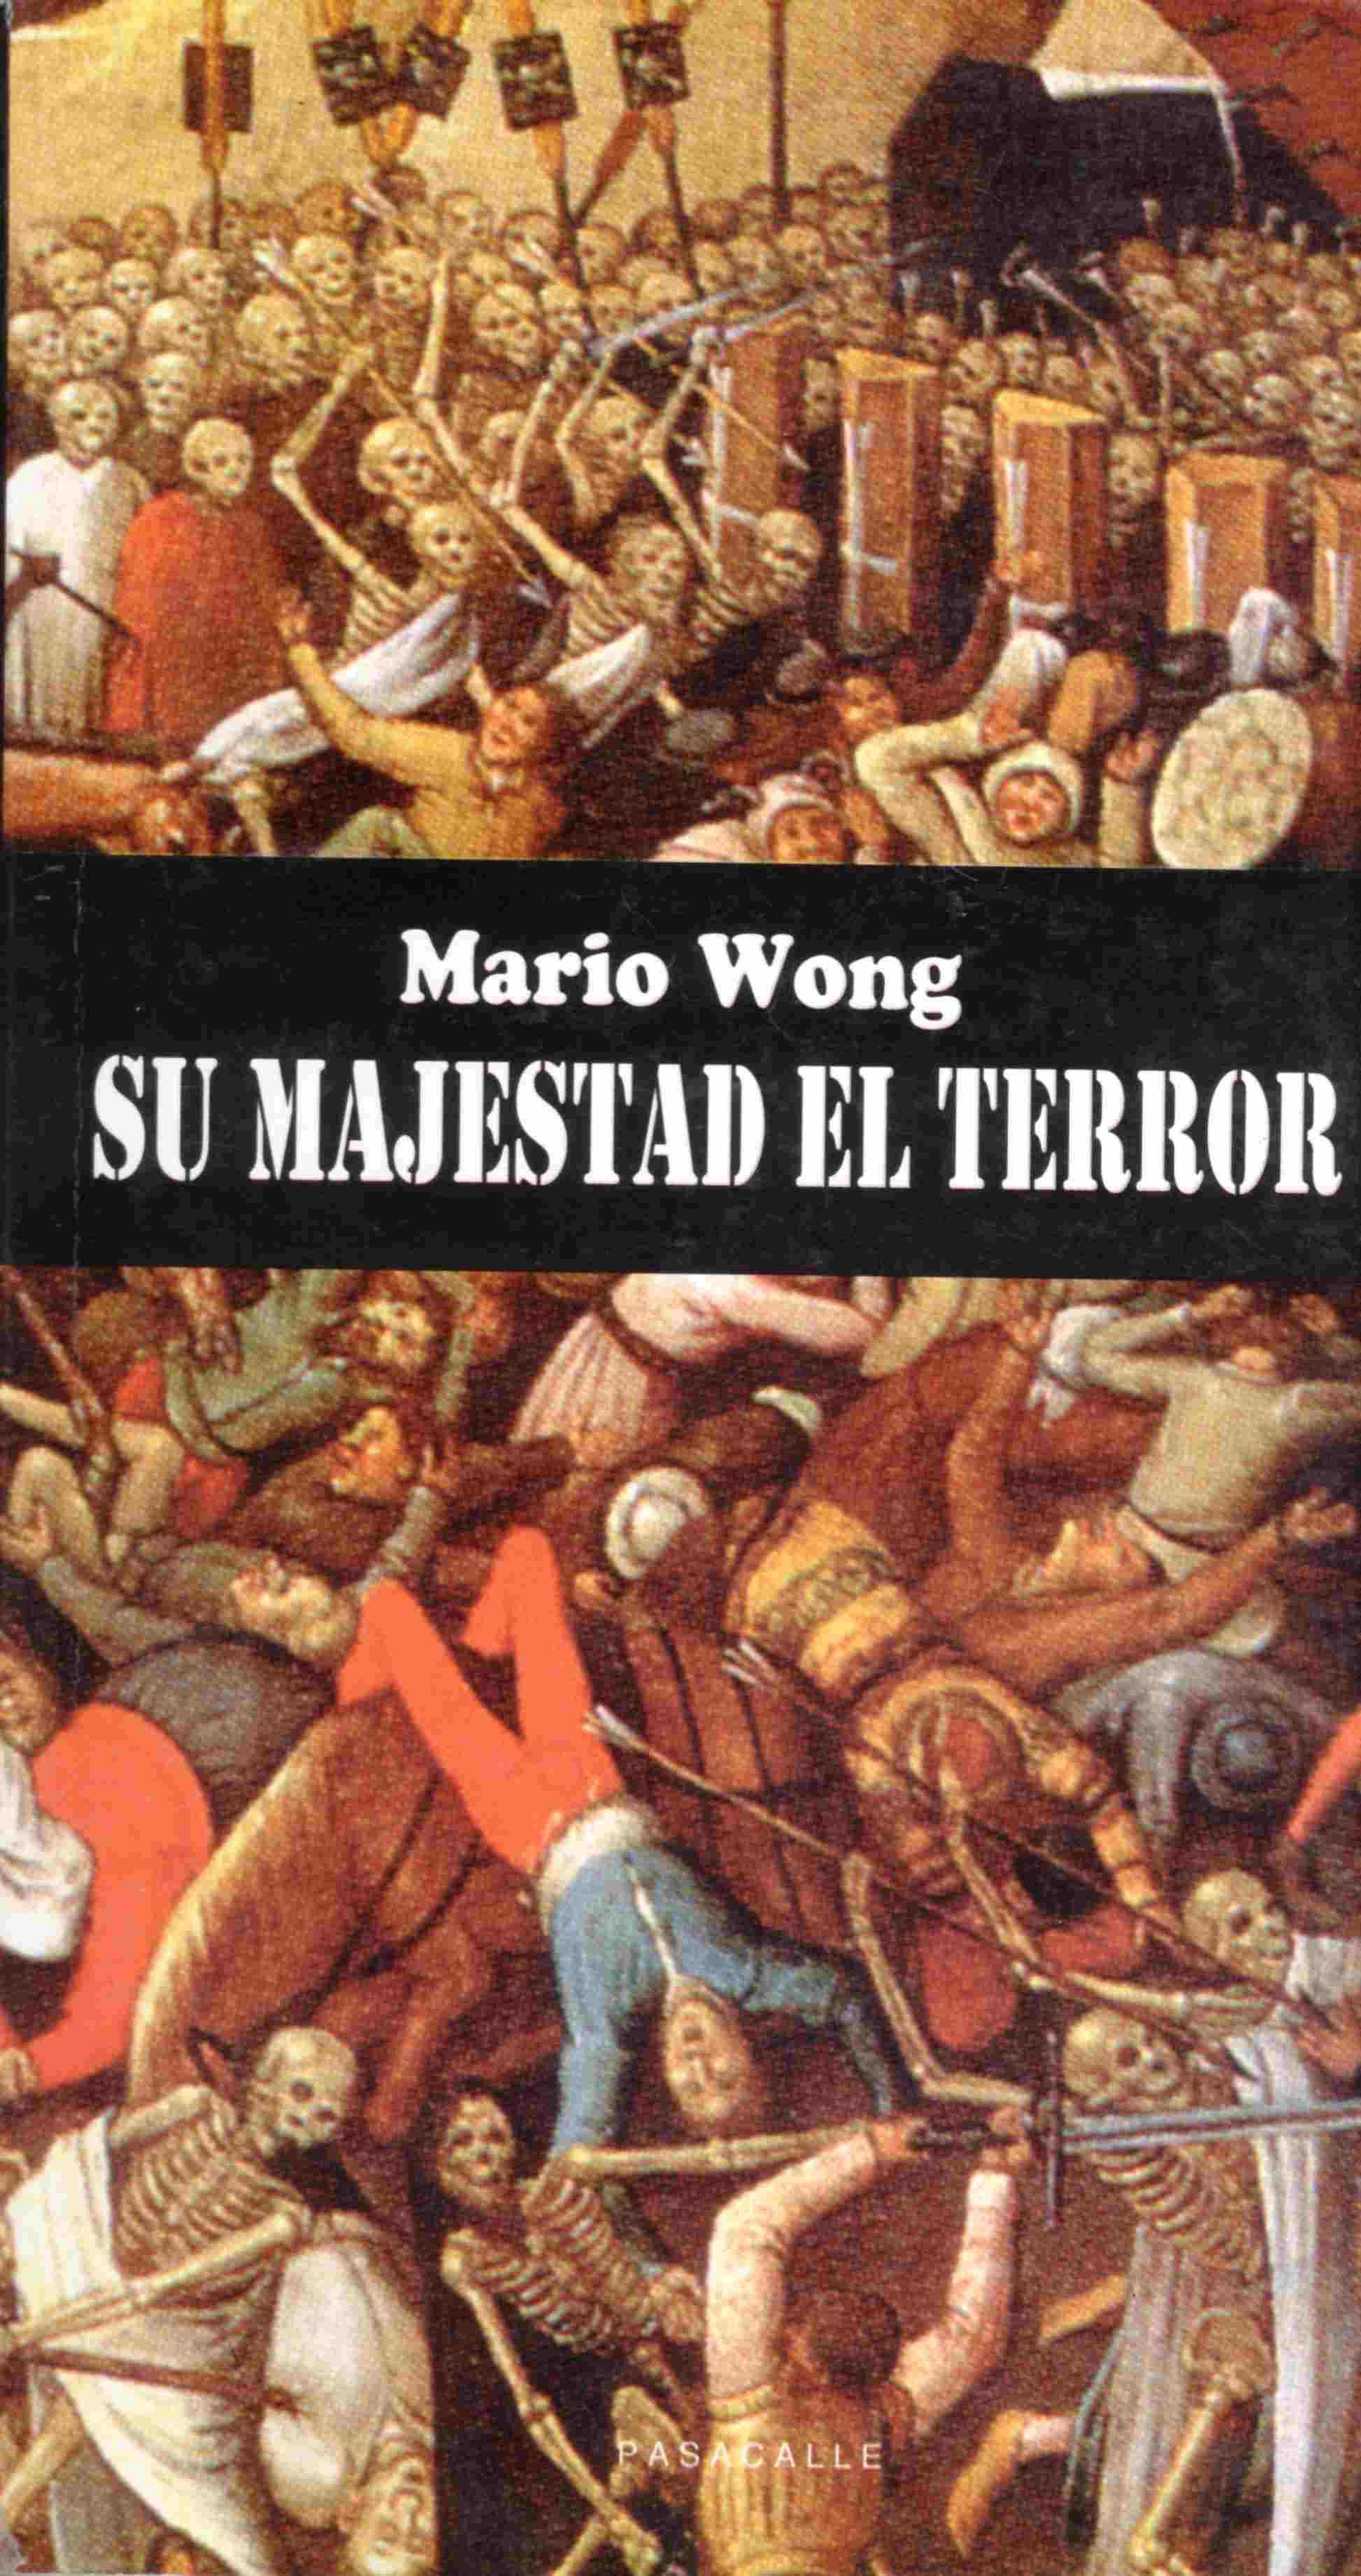 Mario Wong, Su majestad el terror, éd. Pasacalle. Mardi 4 mai à 19h à la Librairie !